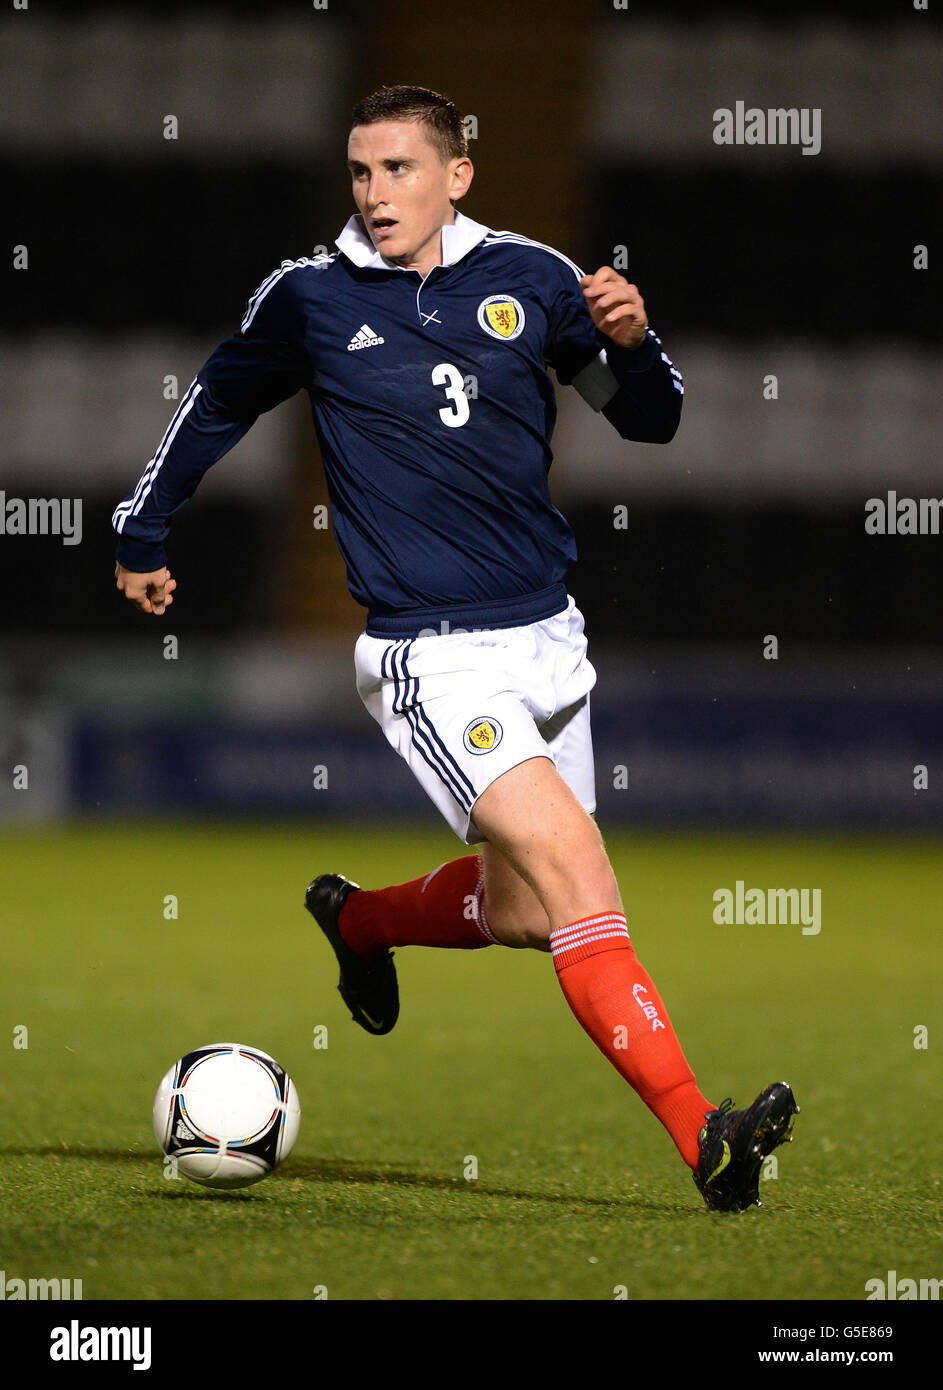 Calcio - UEFA Campionato europeo under 21 2013 - Gruppo Ten - Scozia contro Lussemburgo - Saint Mirren Park. Paul Hanlon della Scozia Foto Stock